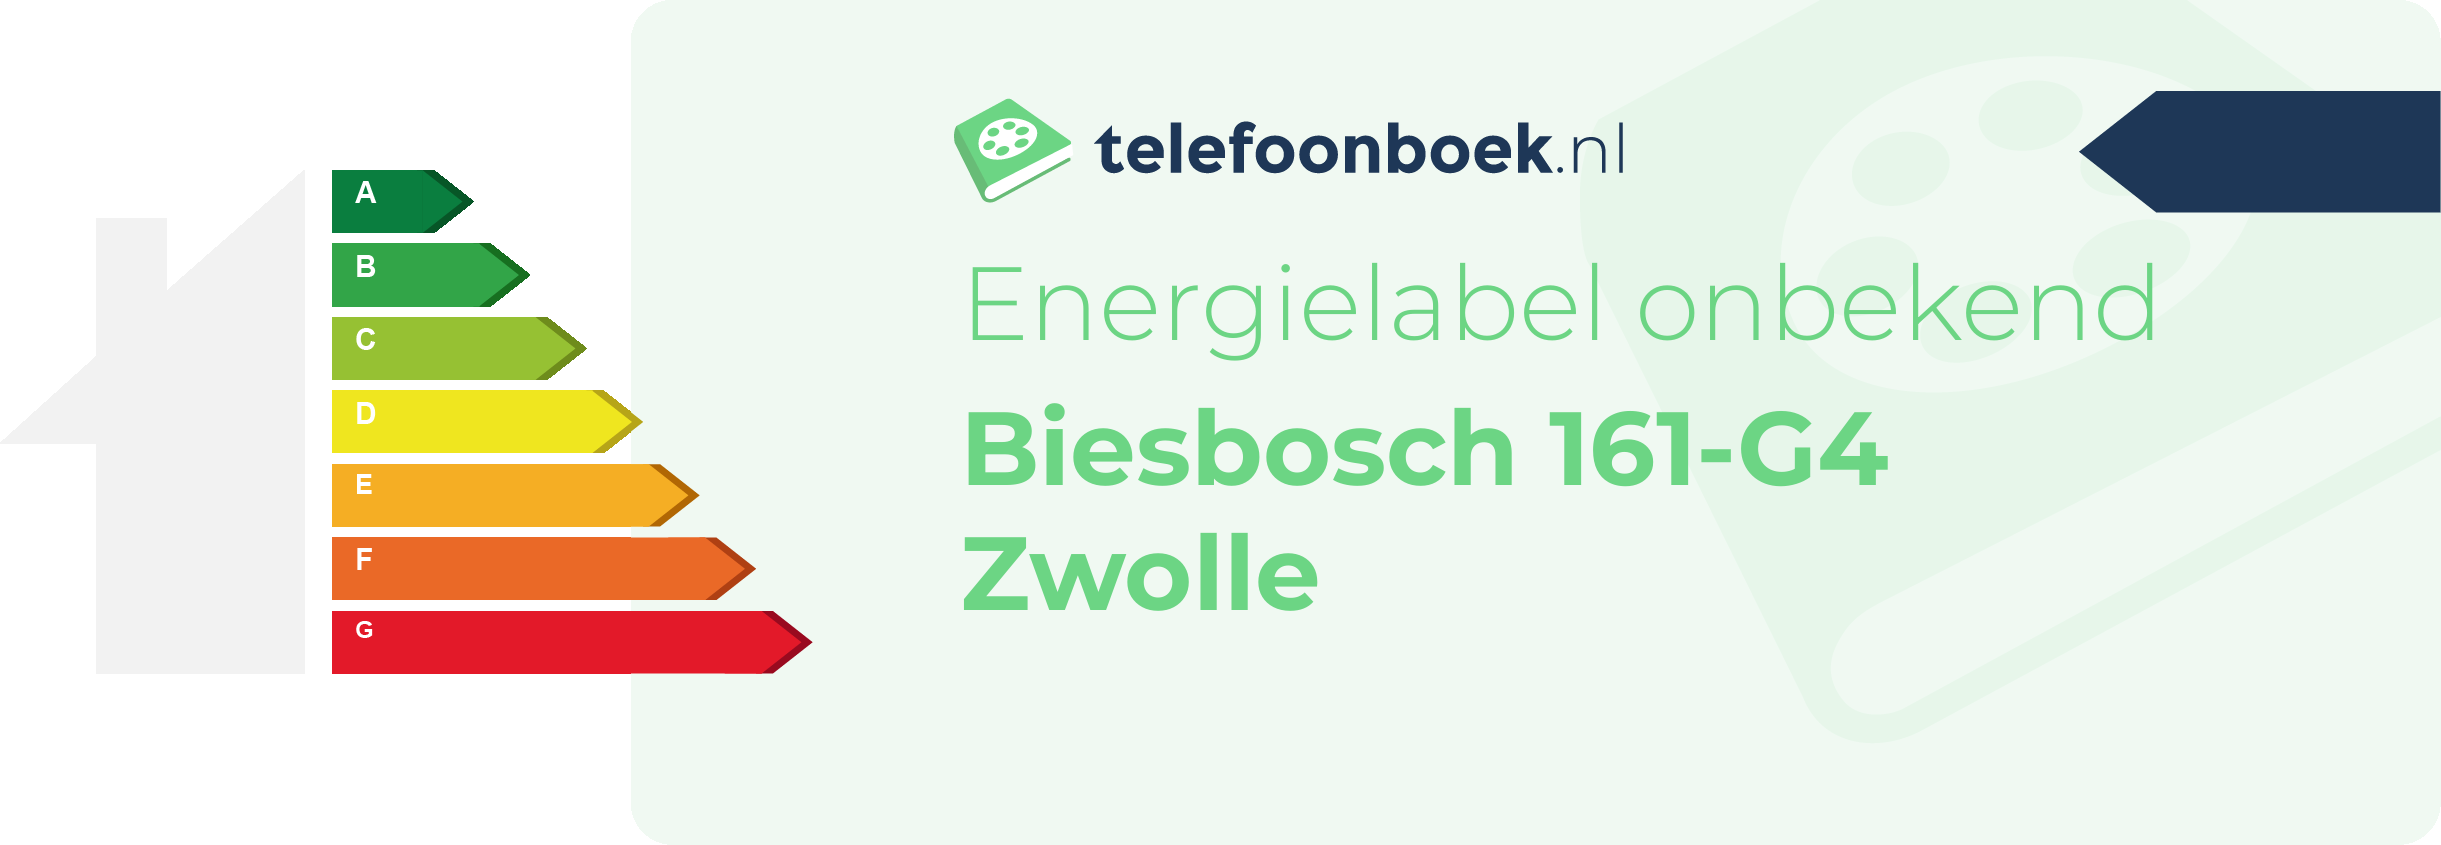 Energielabel Biesbosch 161-G4 Zwolle